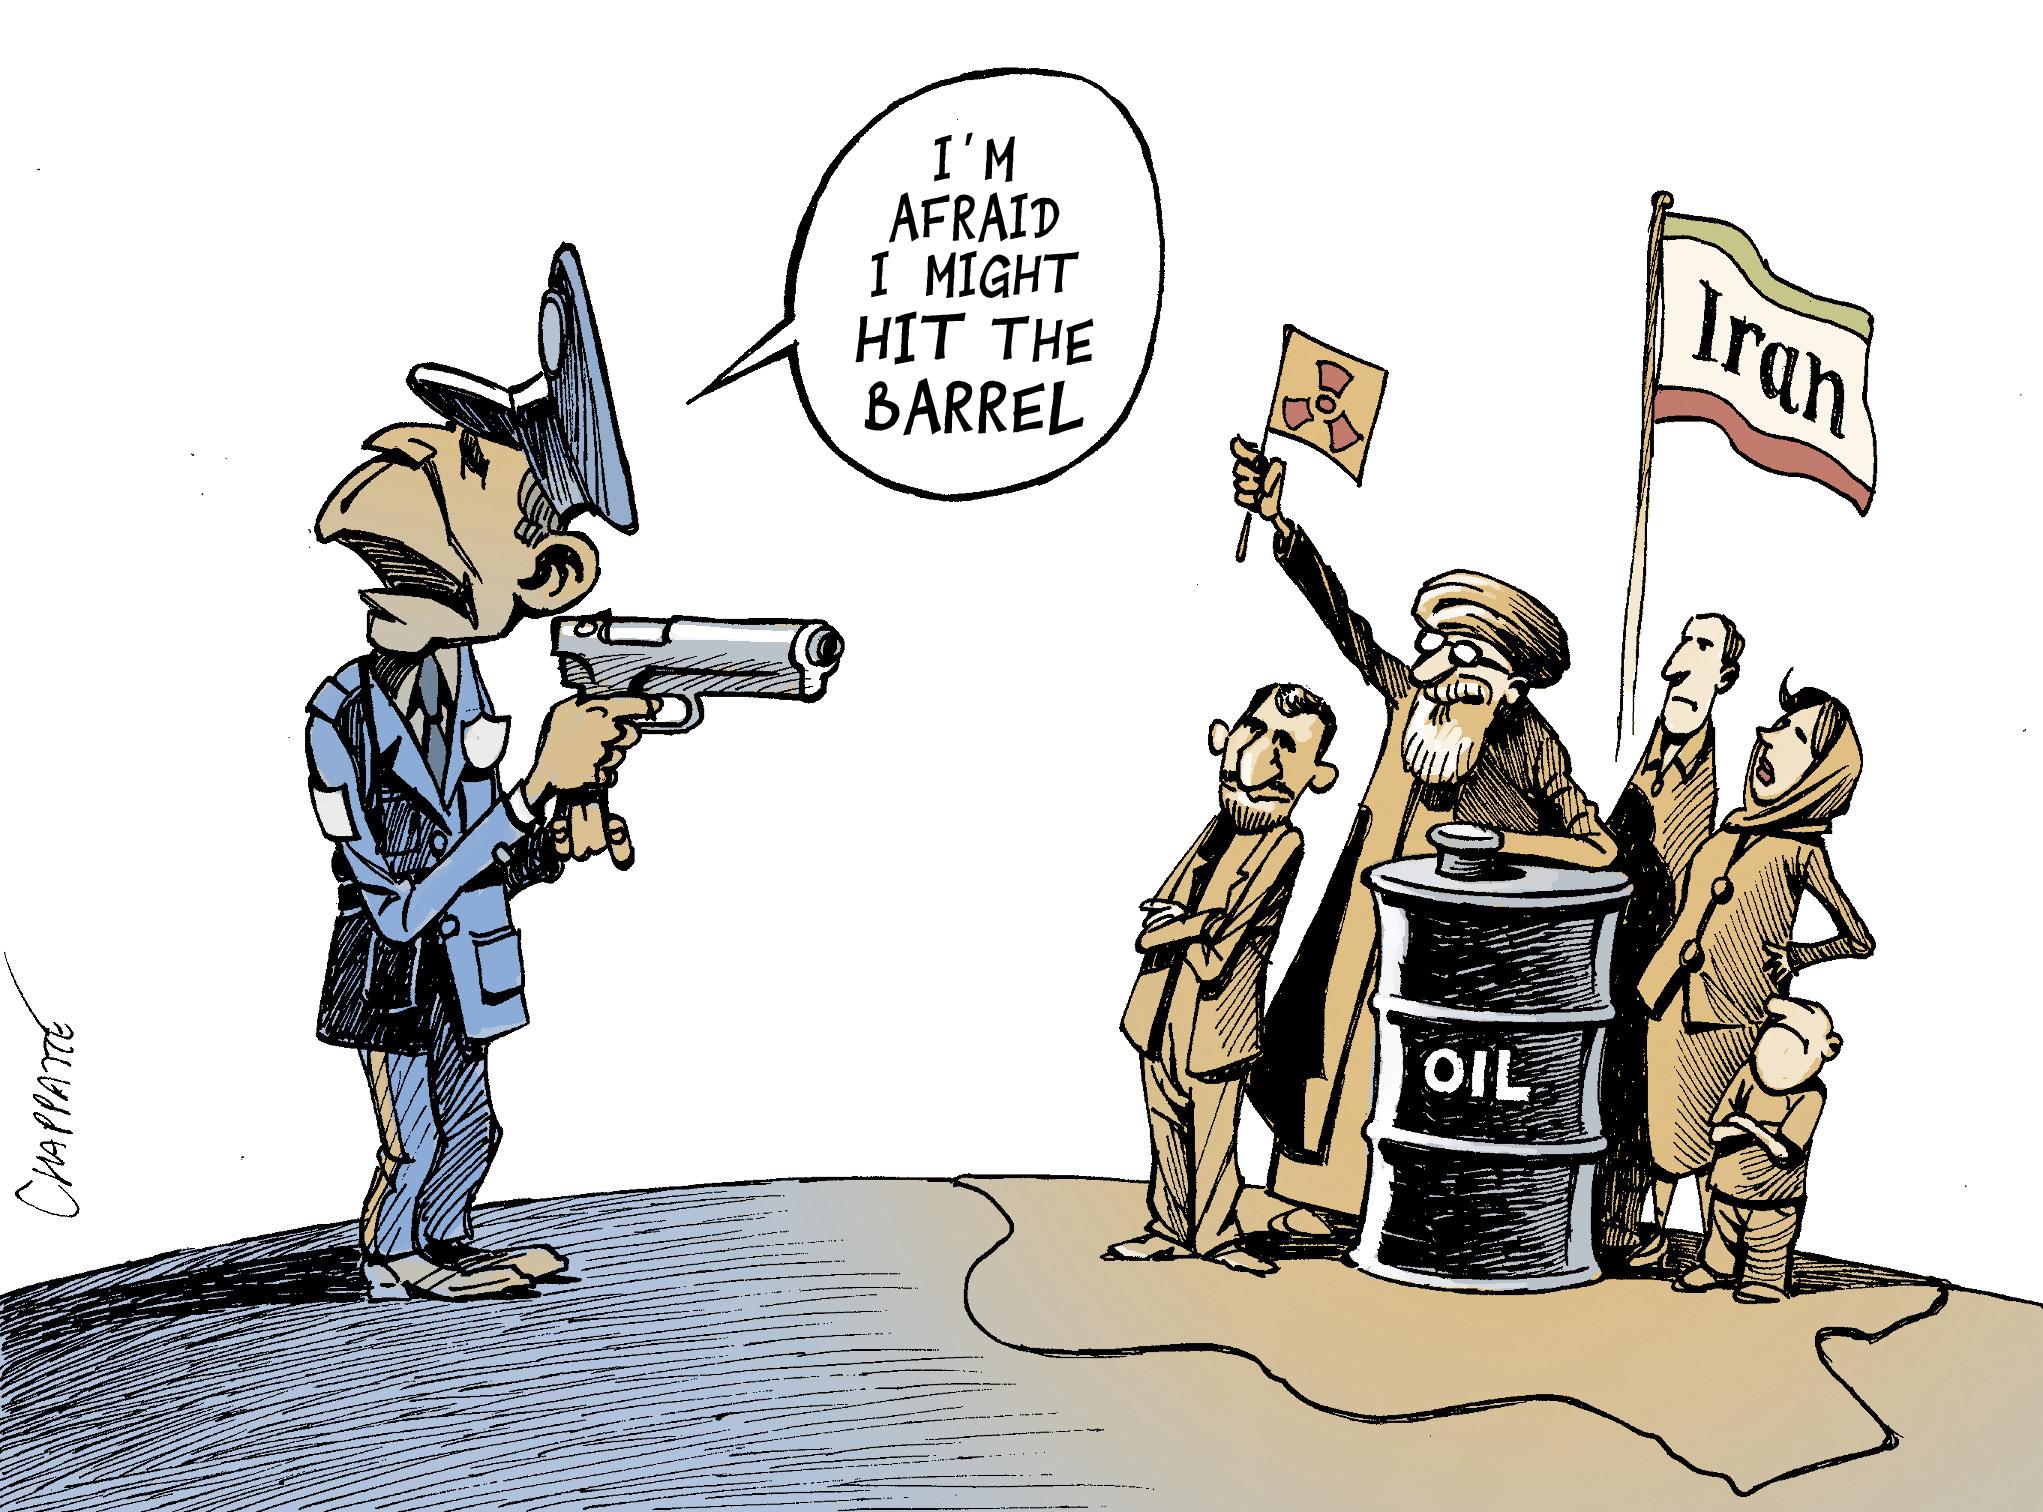 Iran Defies the US